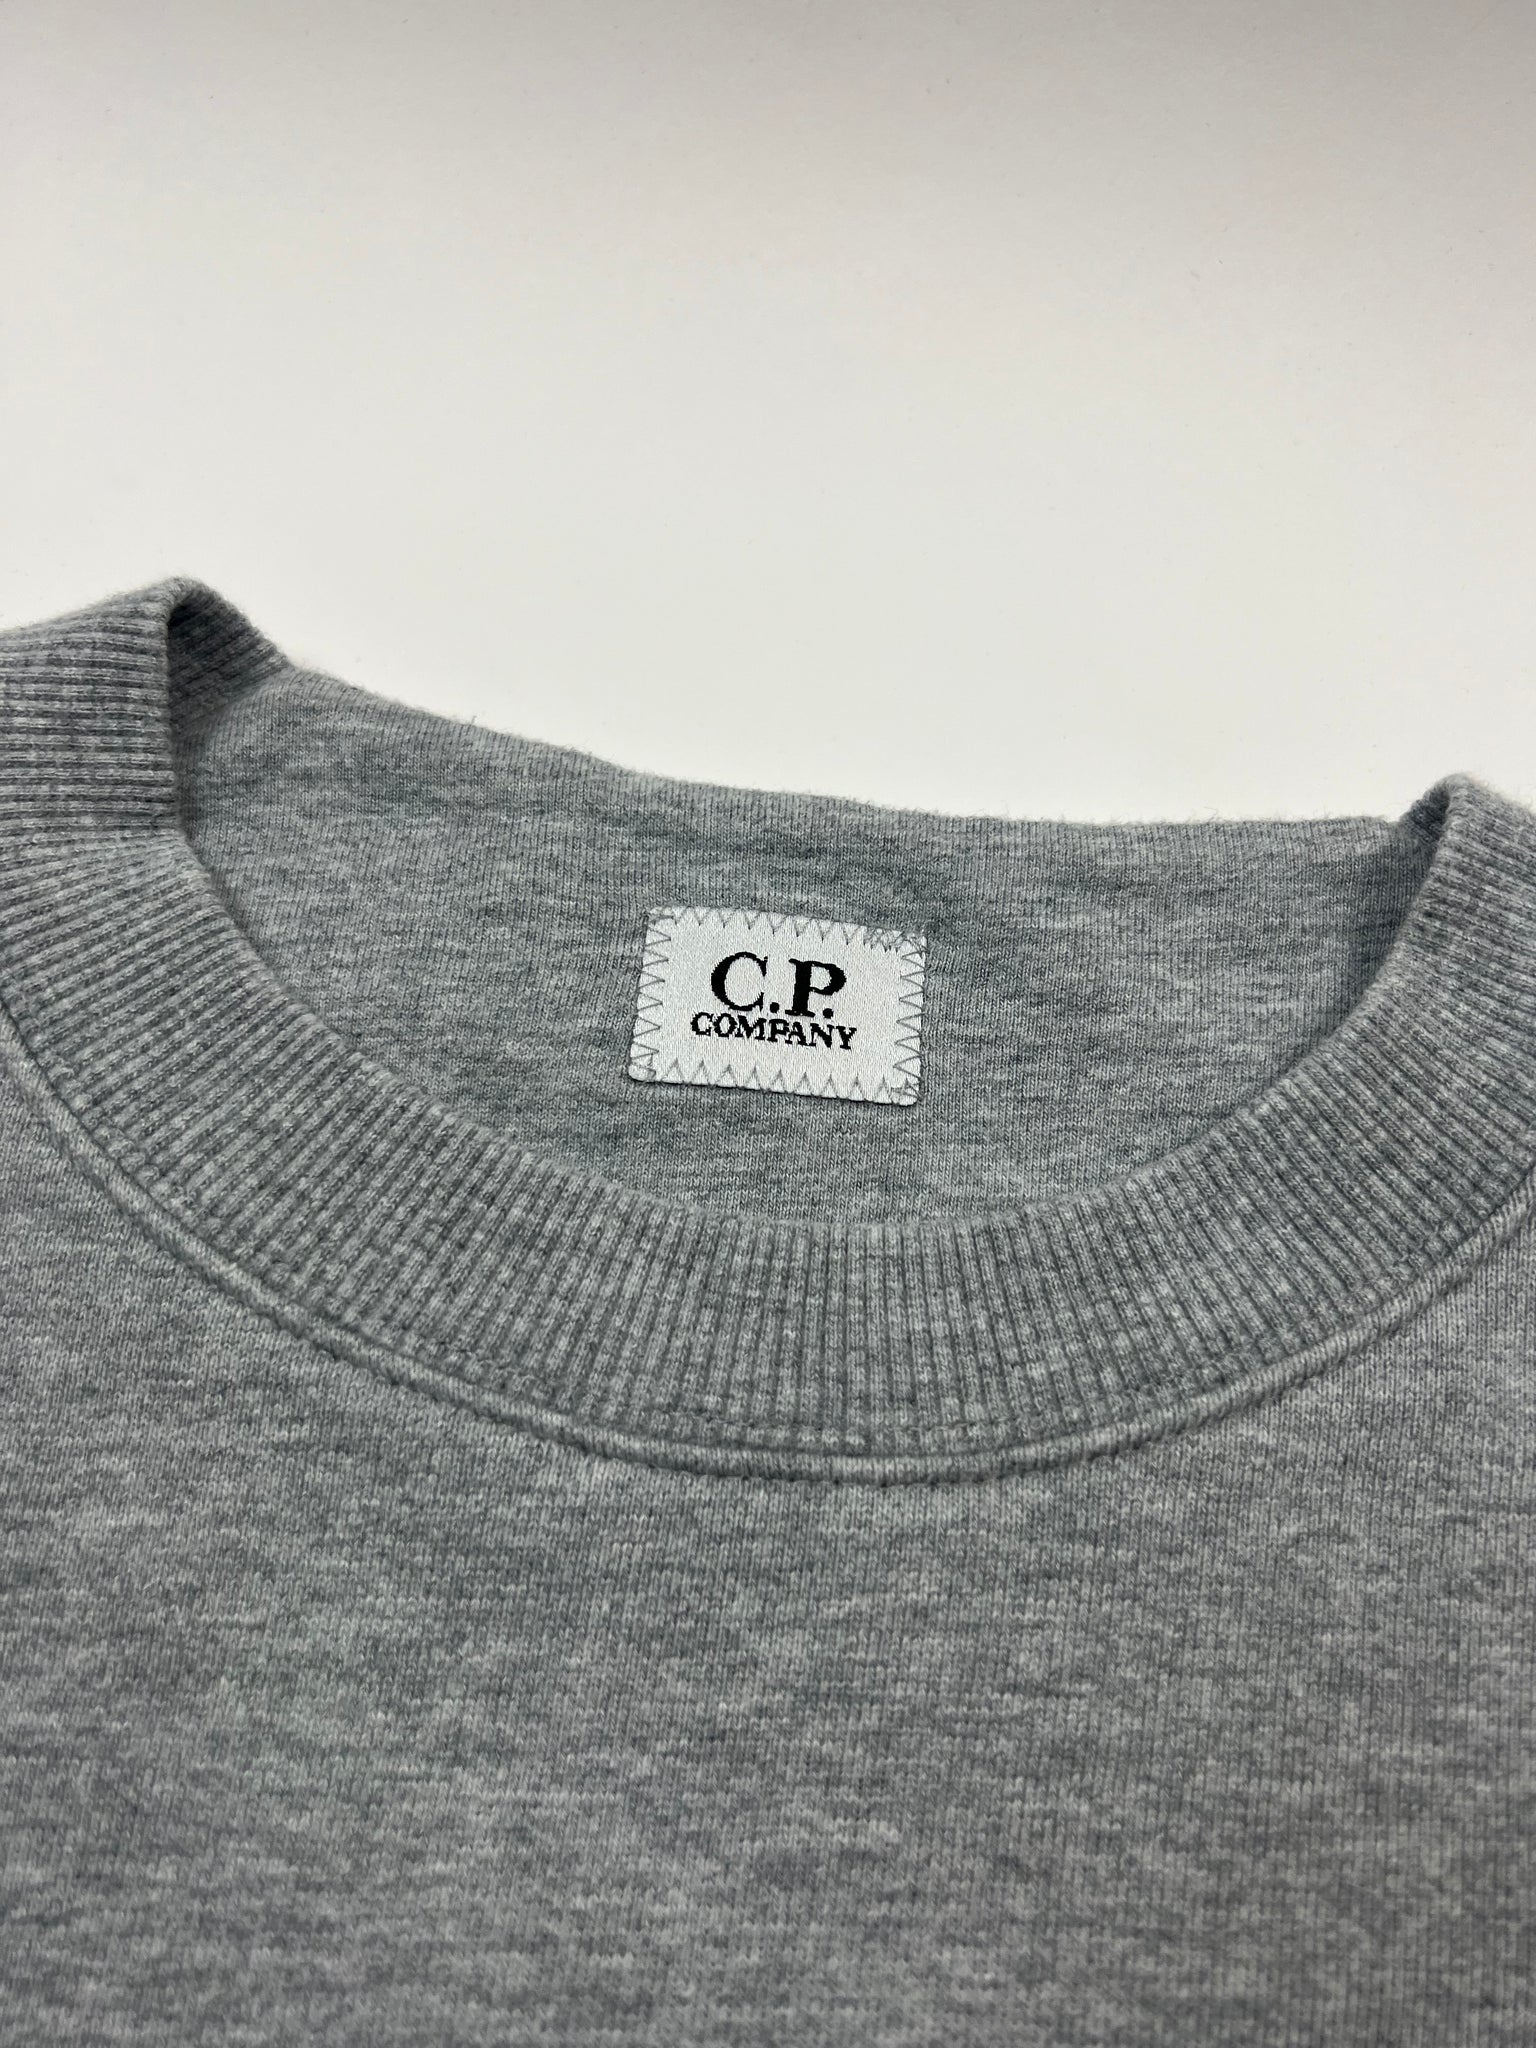 C.P. Company Sweater (S)